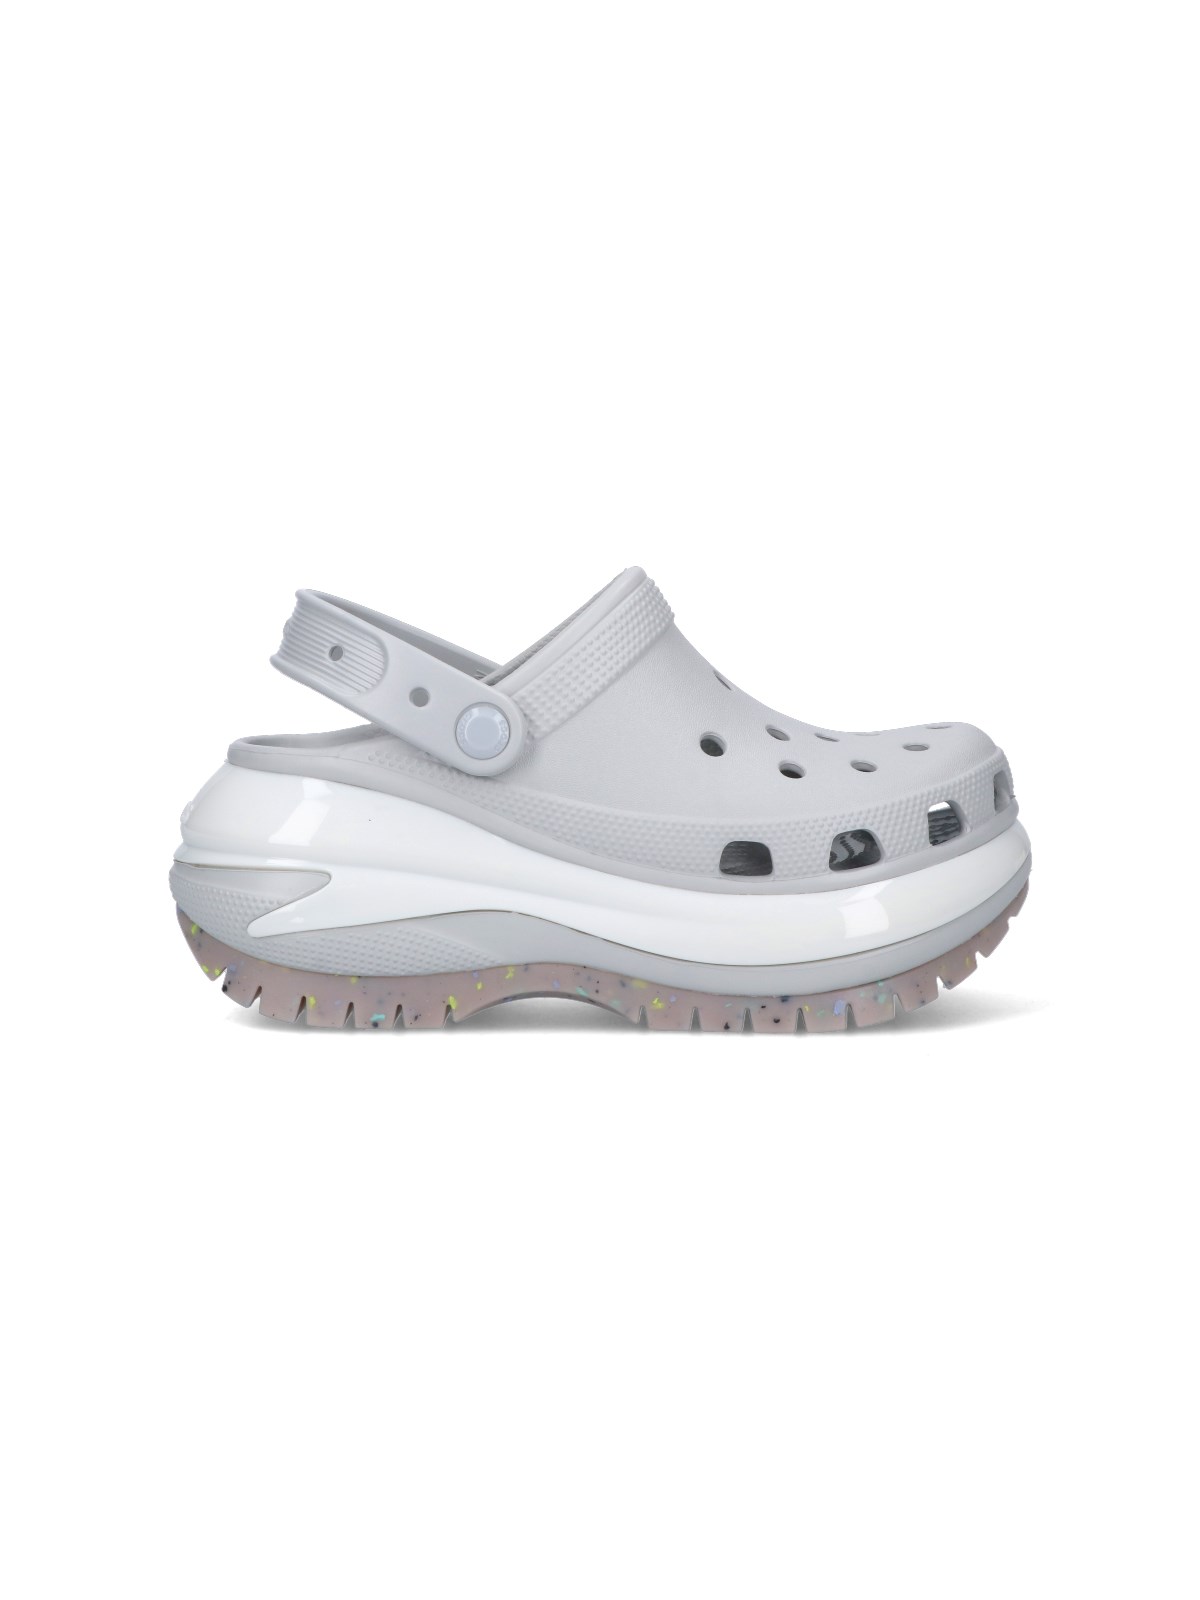 Crocs Flat Shoes In Grey